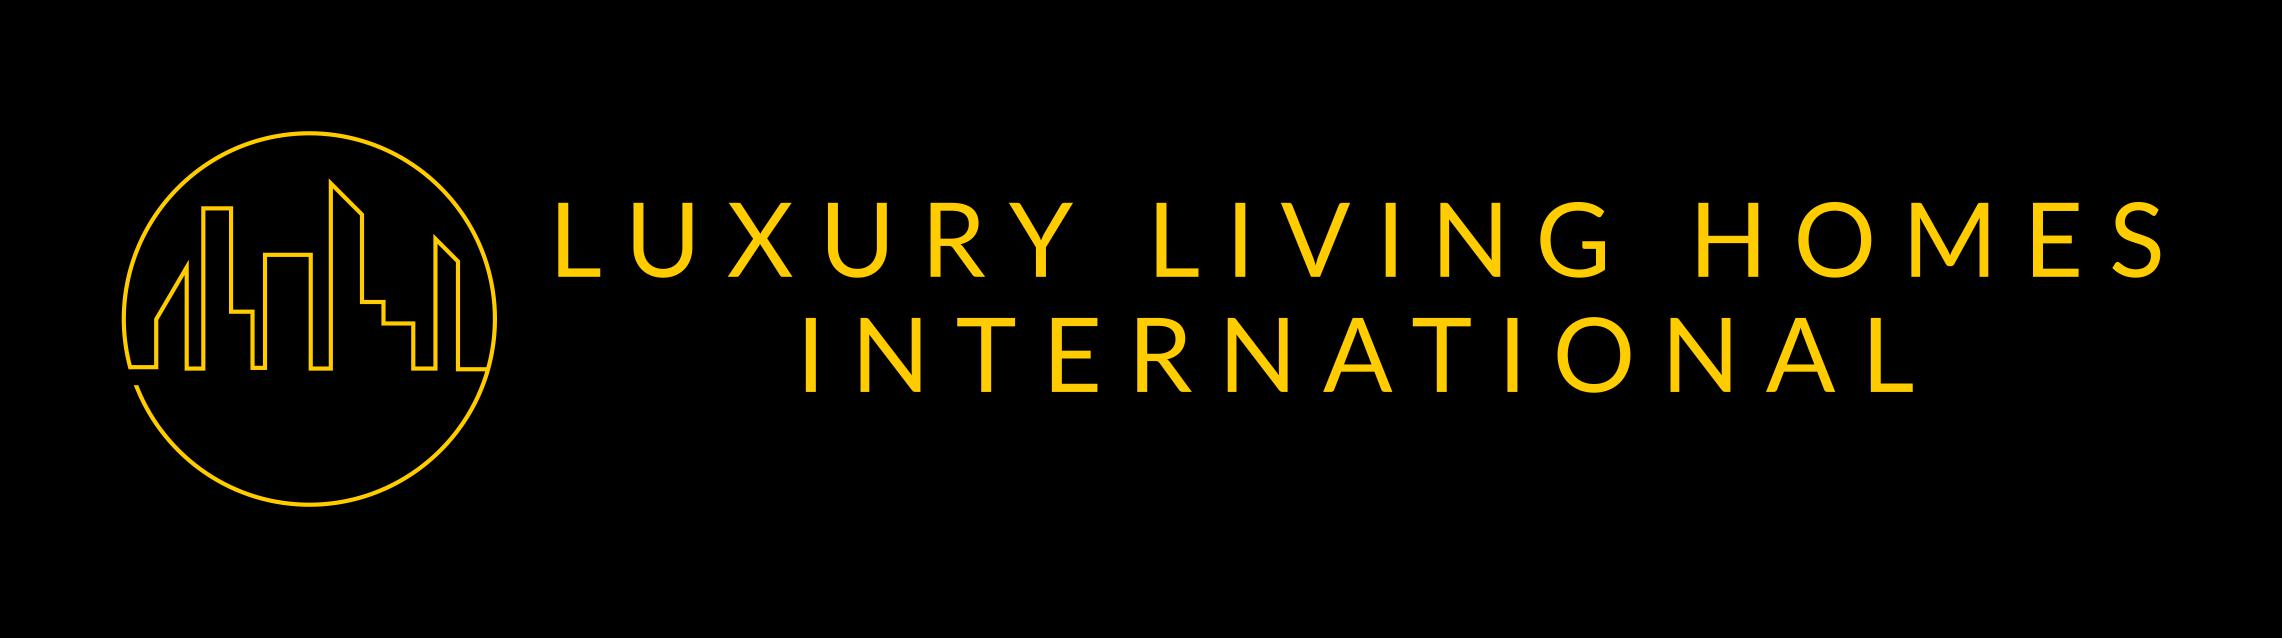 Luxury Living Homes International